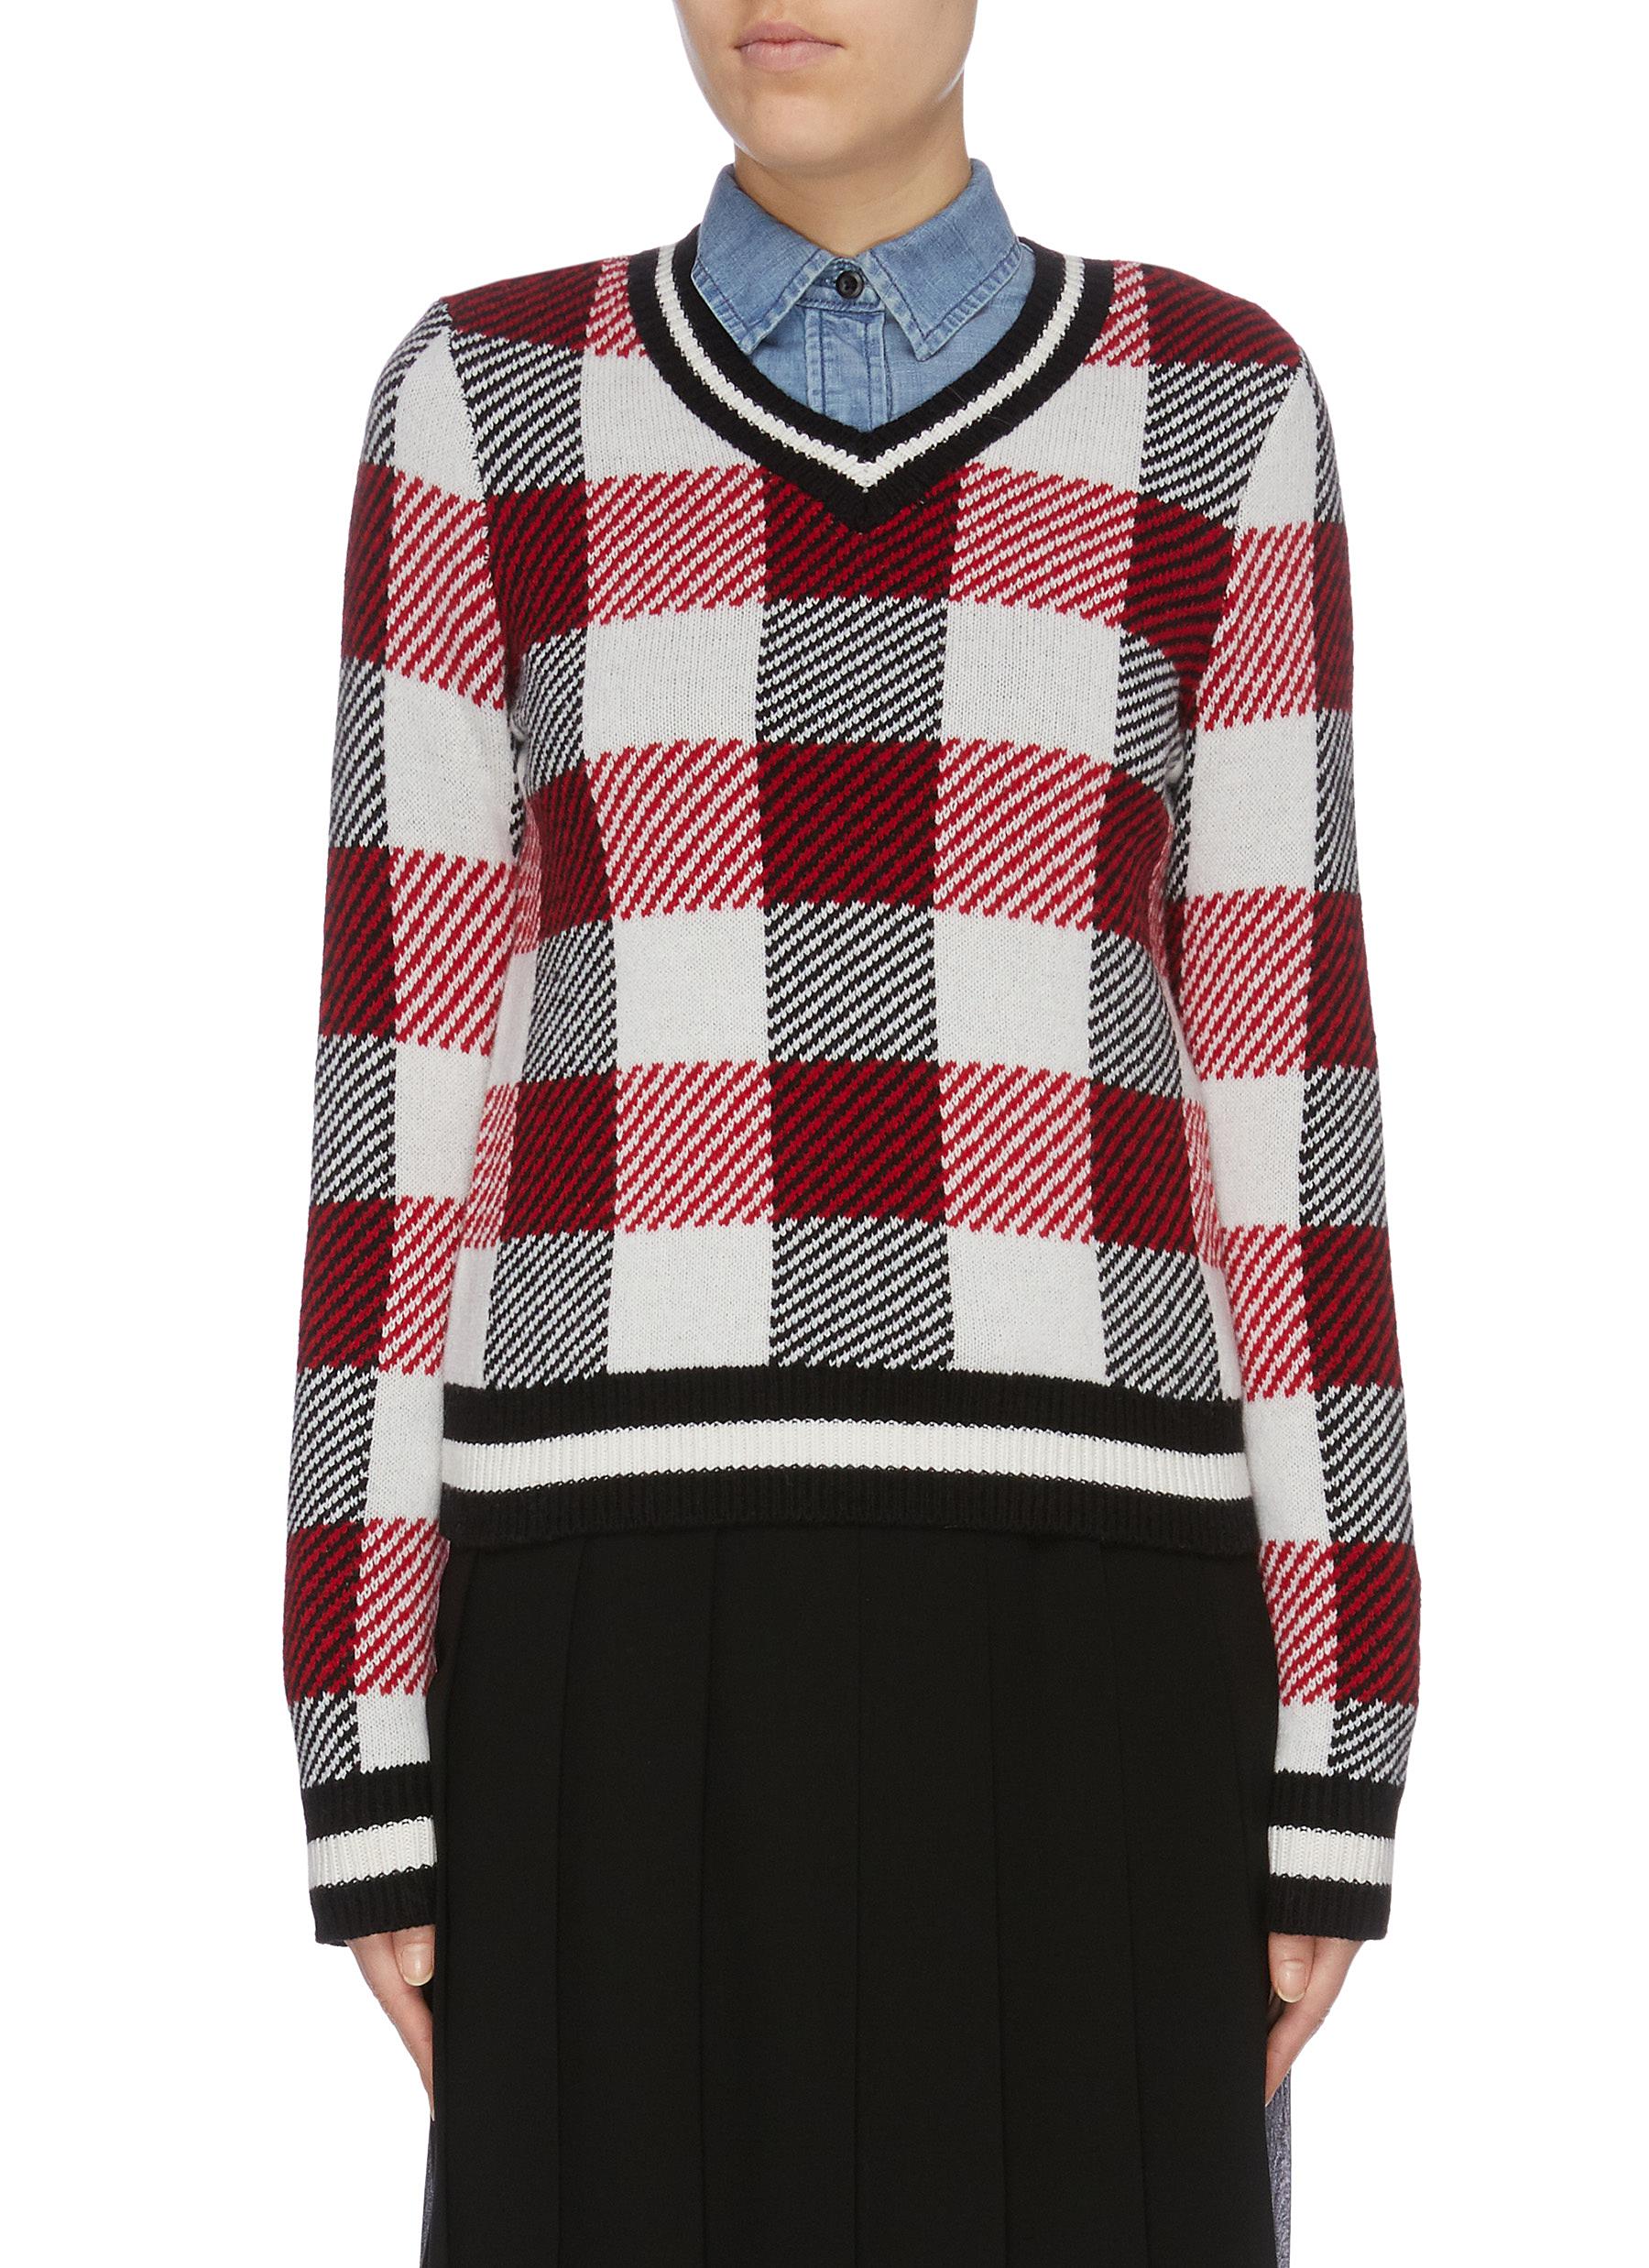 Gabby check plaid jacquard Merino wool sweater by Rag & Bone/Jean